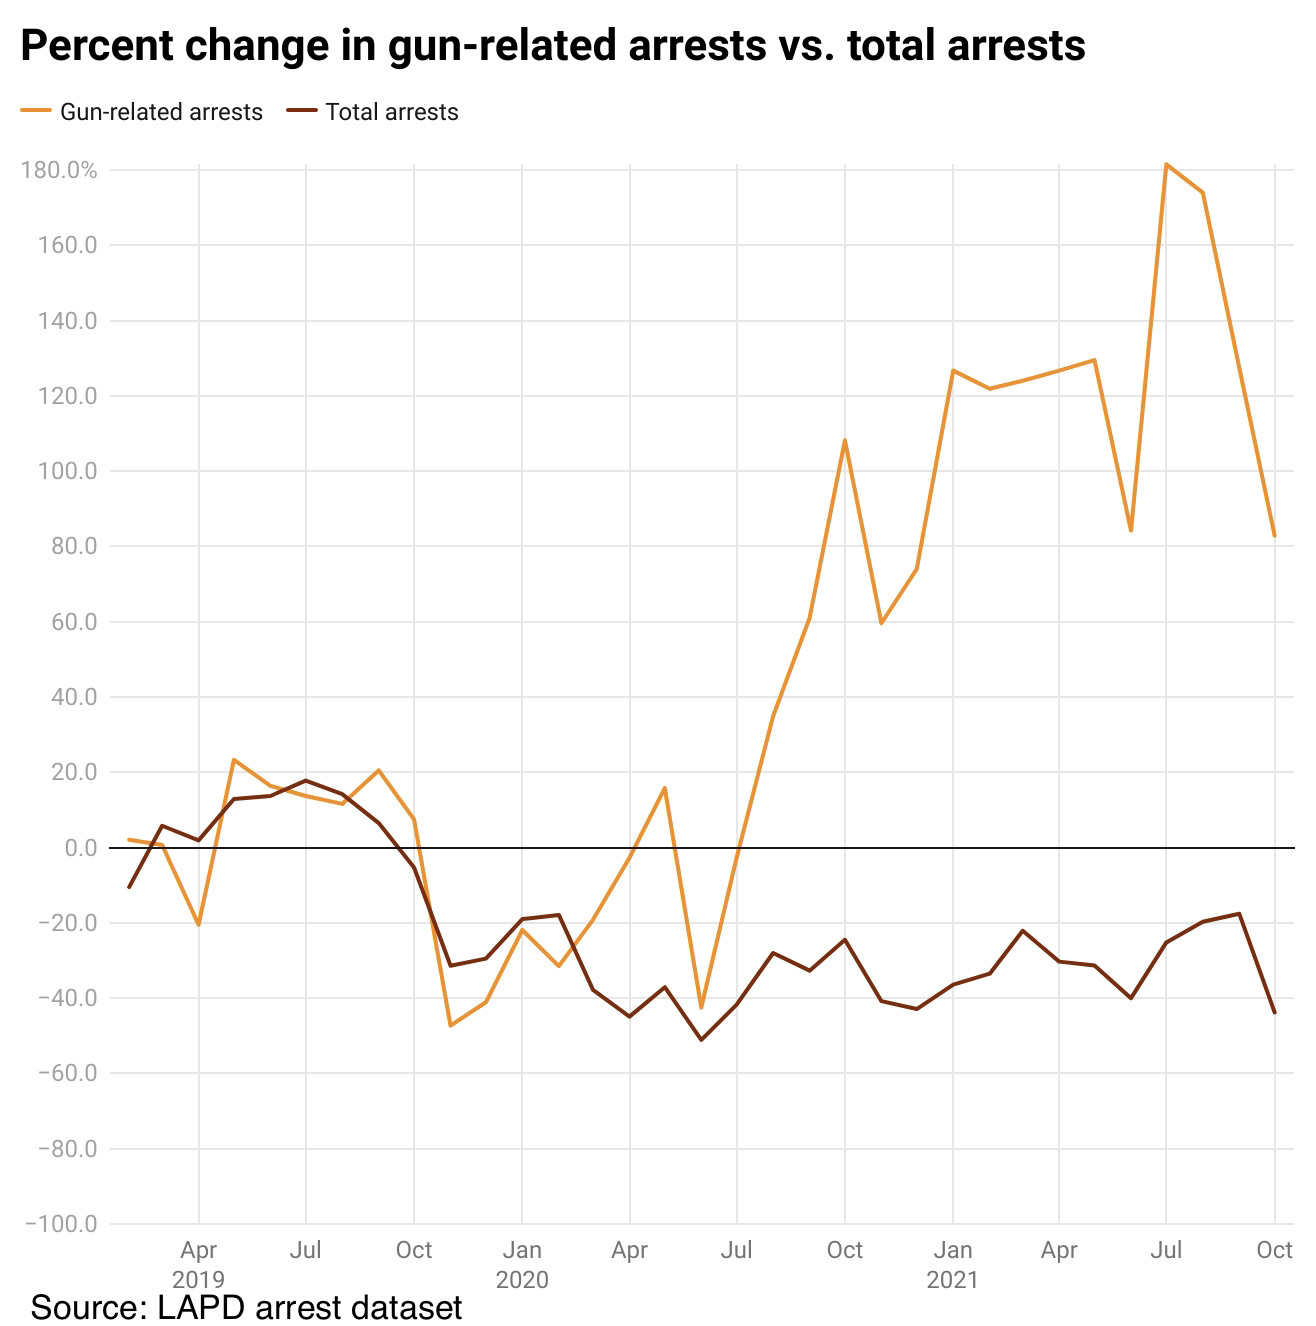 Percent change in gun-related arrests vs. overall arrests